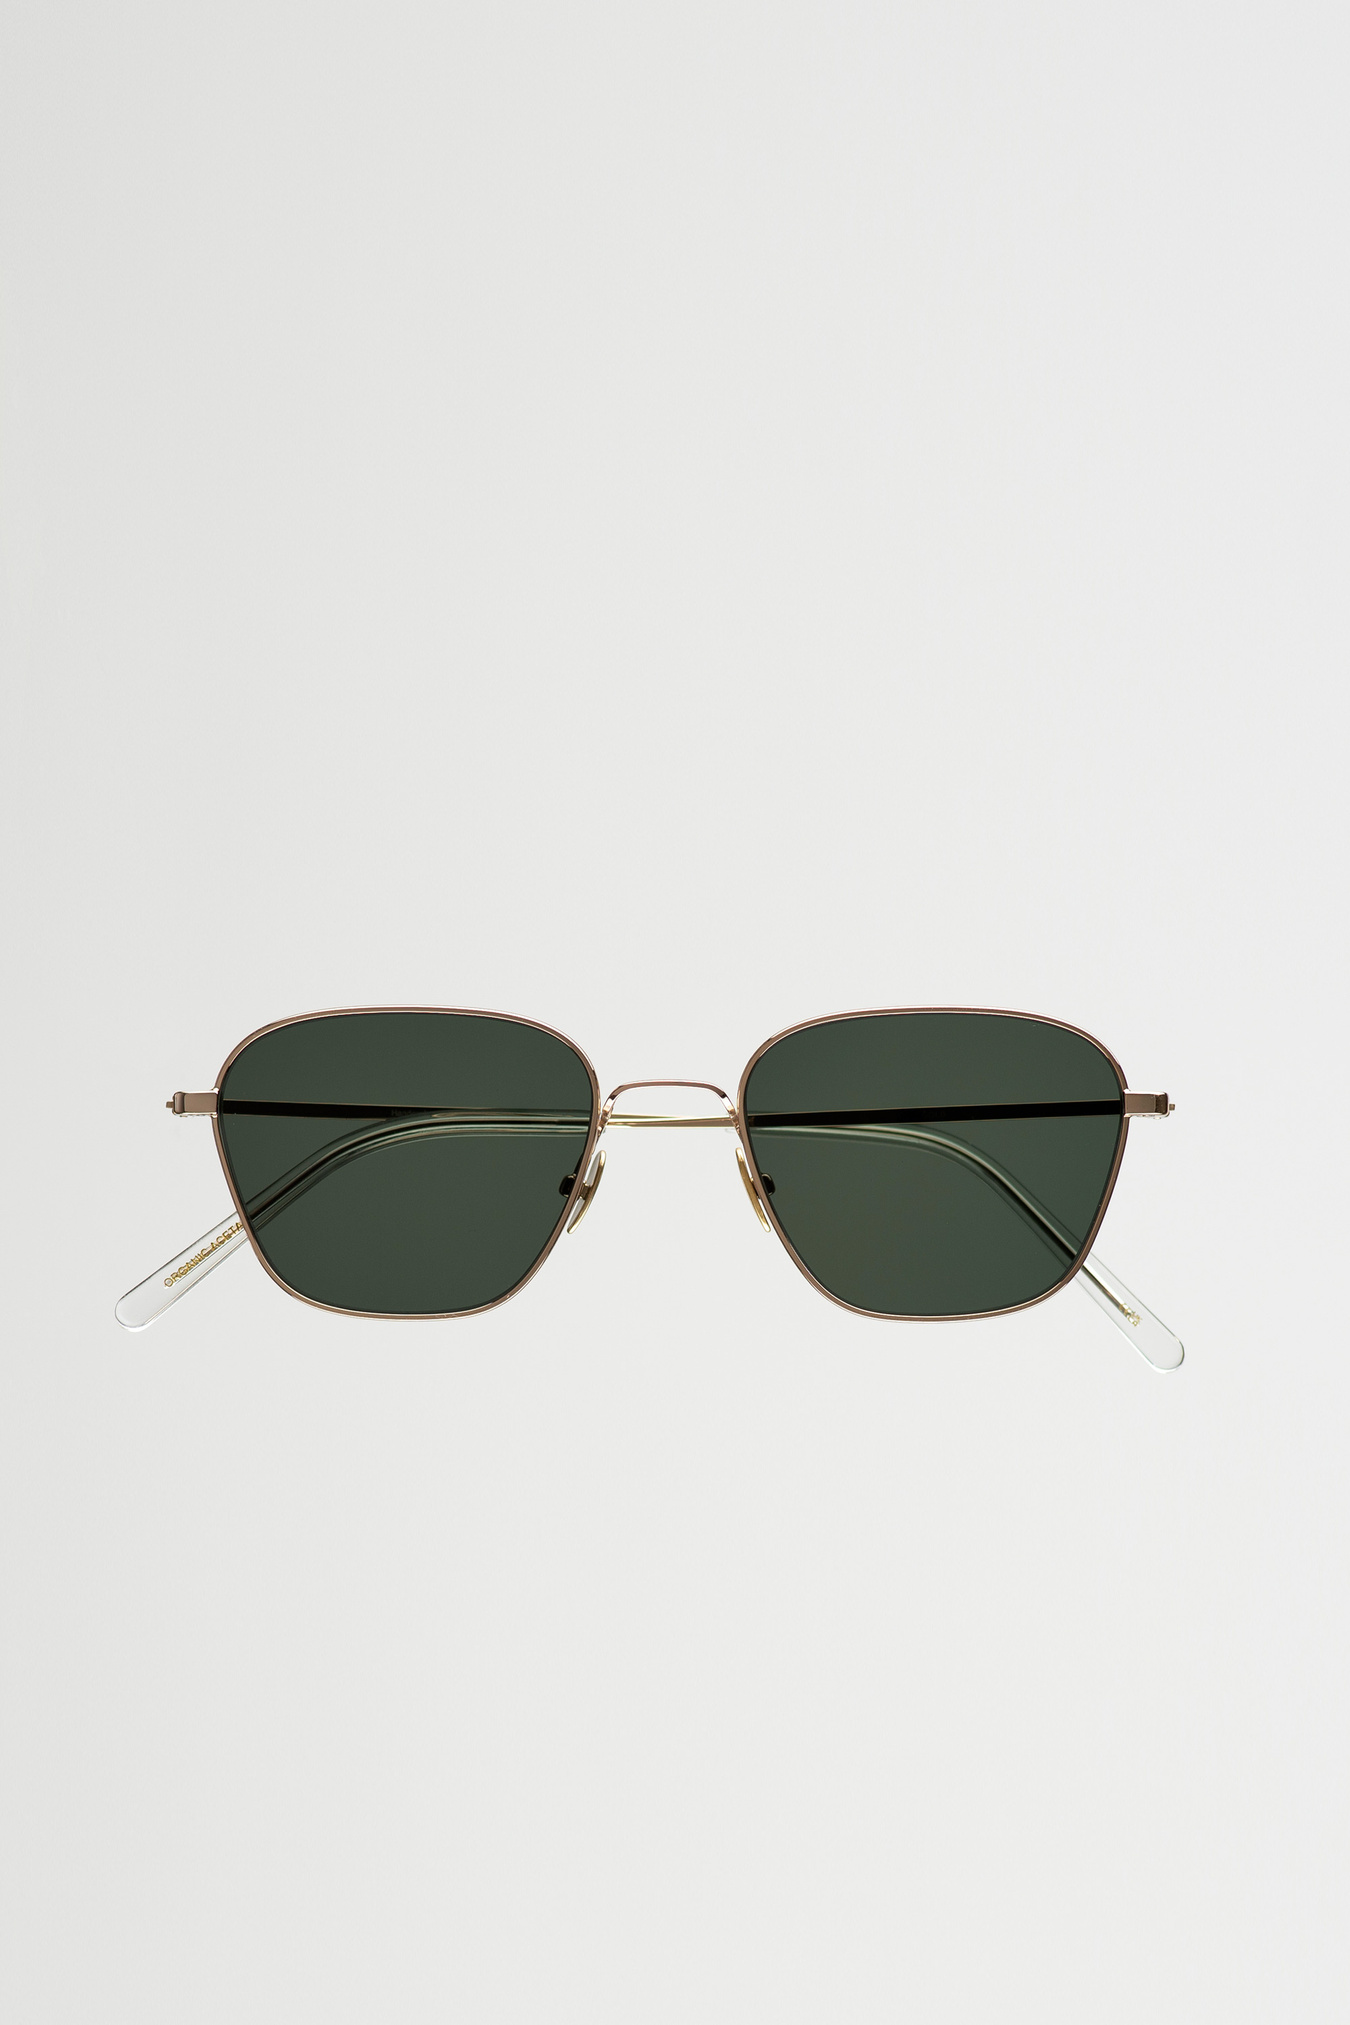 Monokel Eyewear Otis Gold - Green Solid lens Sunglasses 